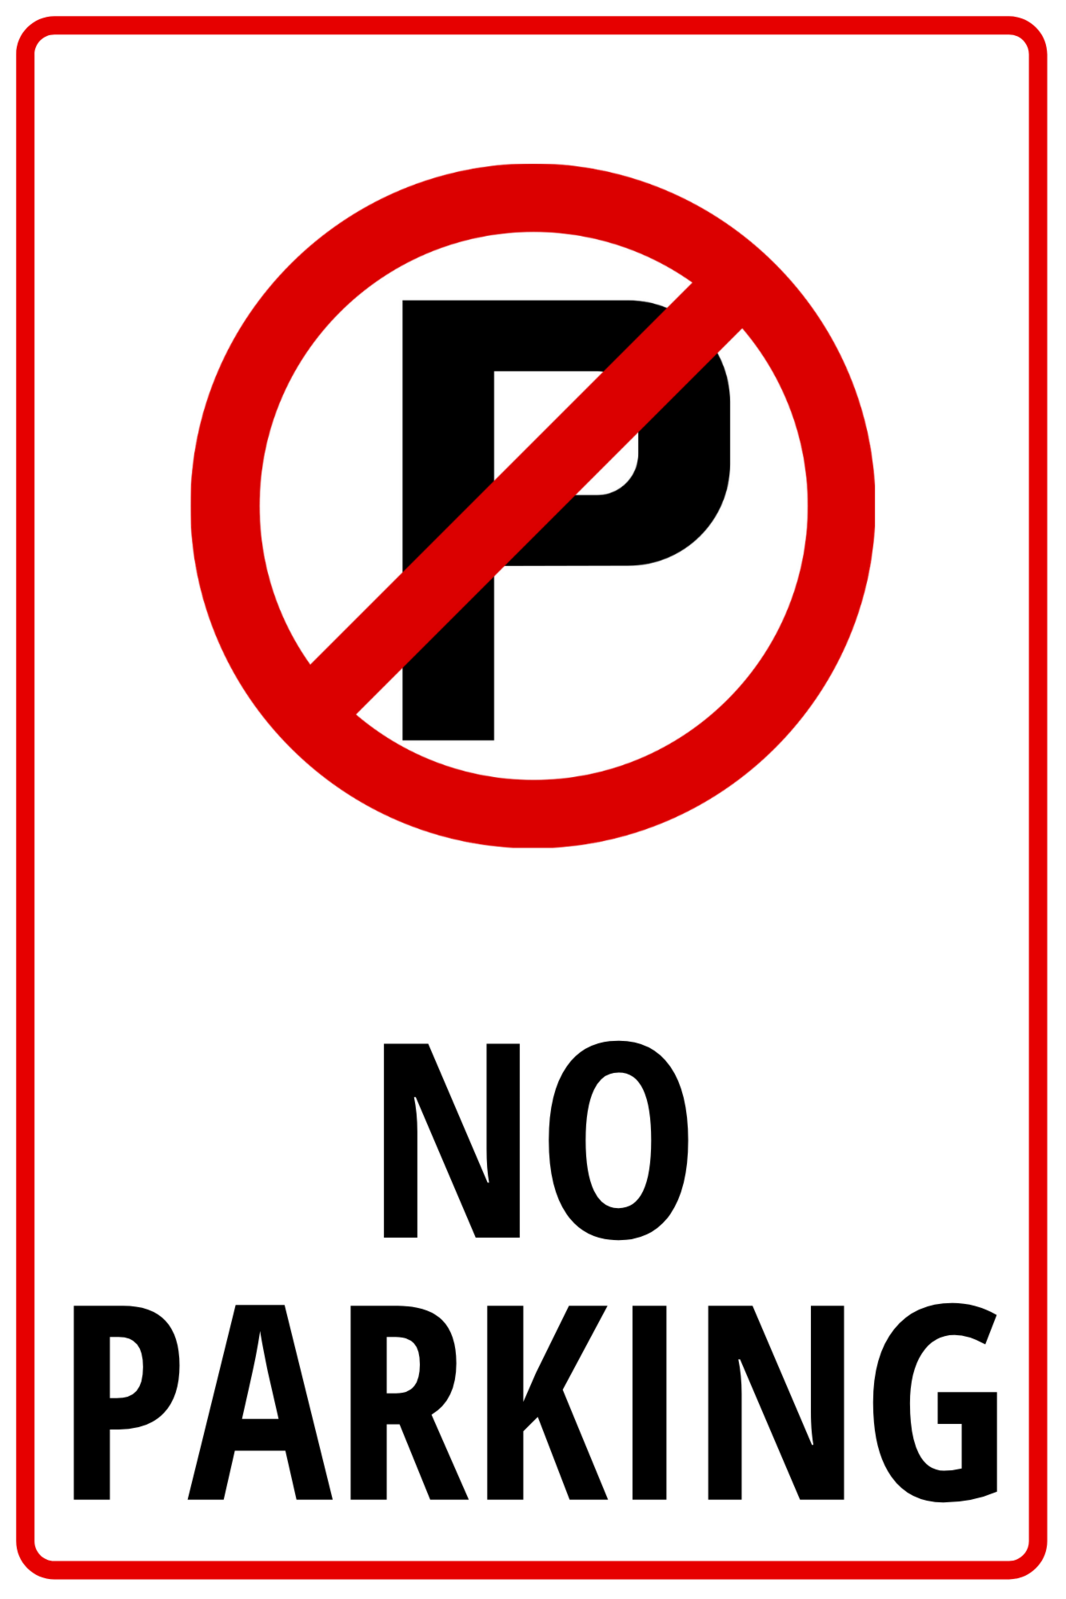 No Parking Signs available at Peninsula Safety Supplies